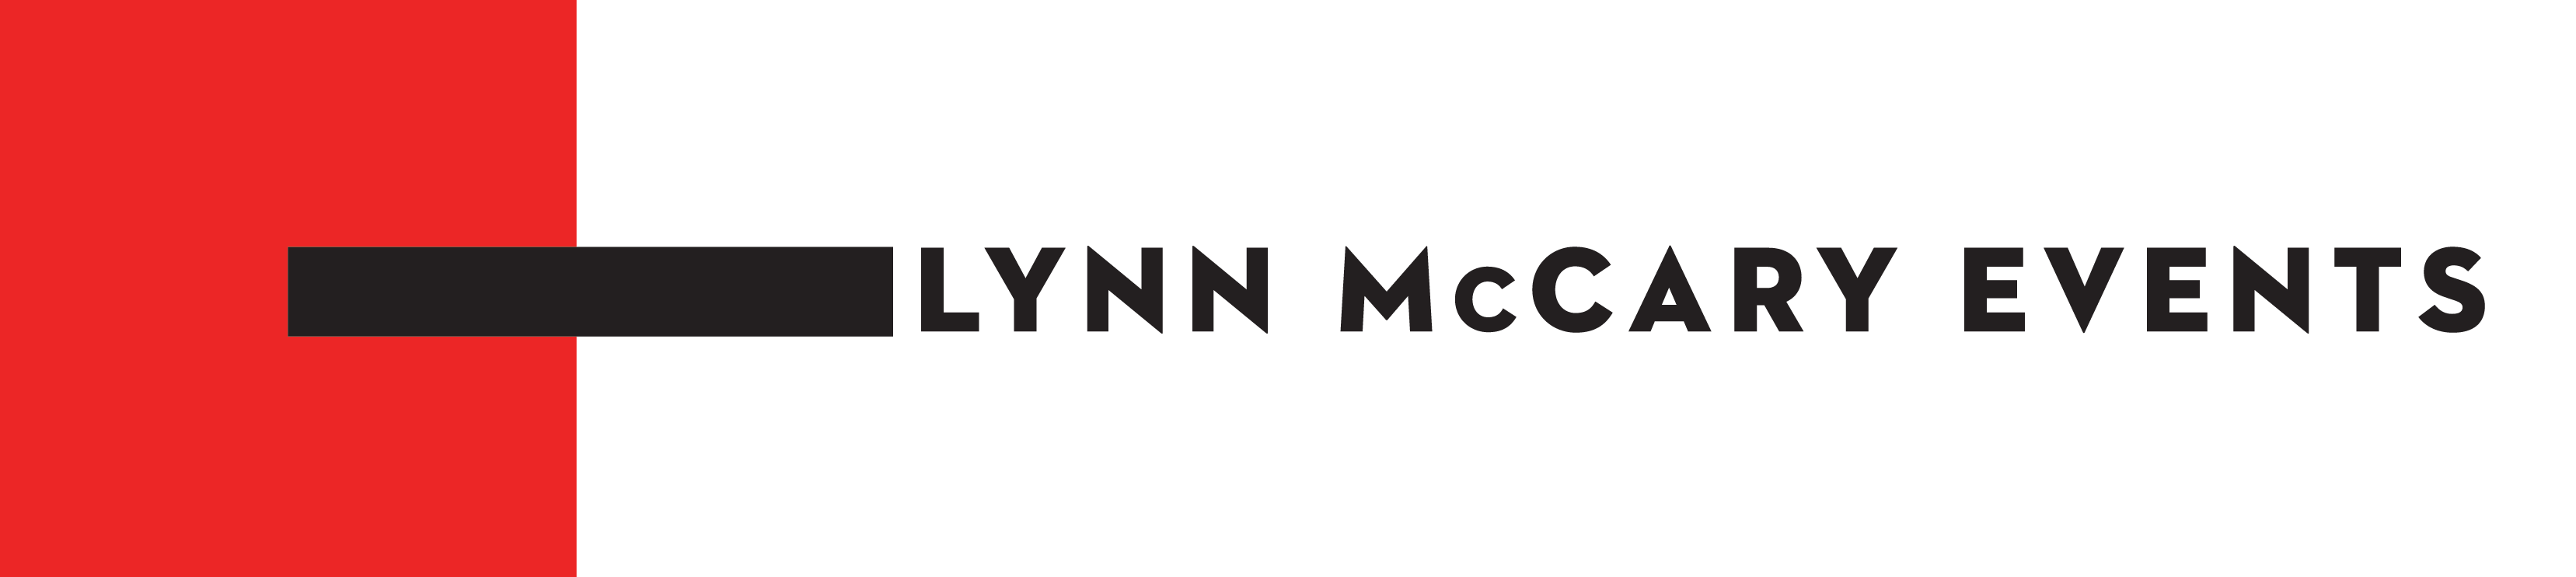 Lynn McCary Events